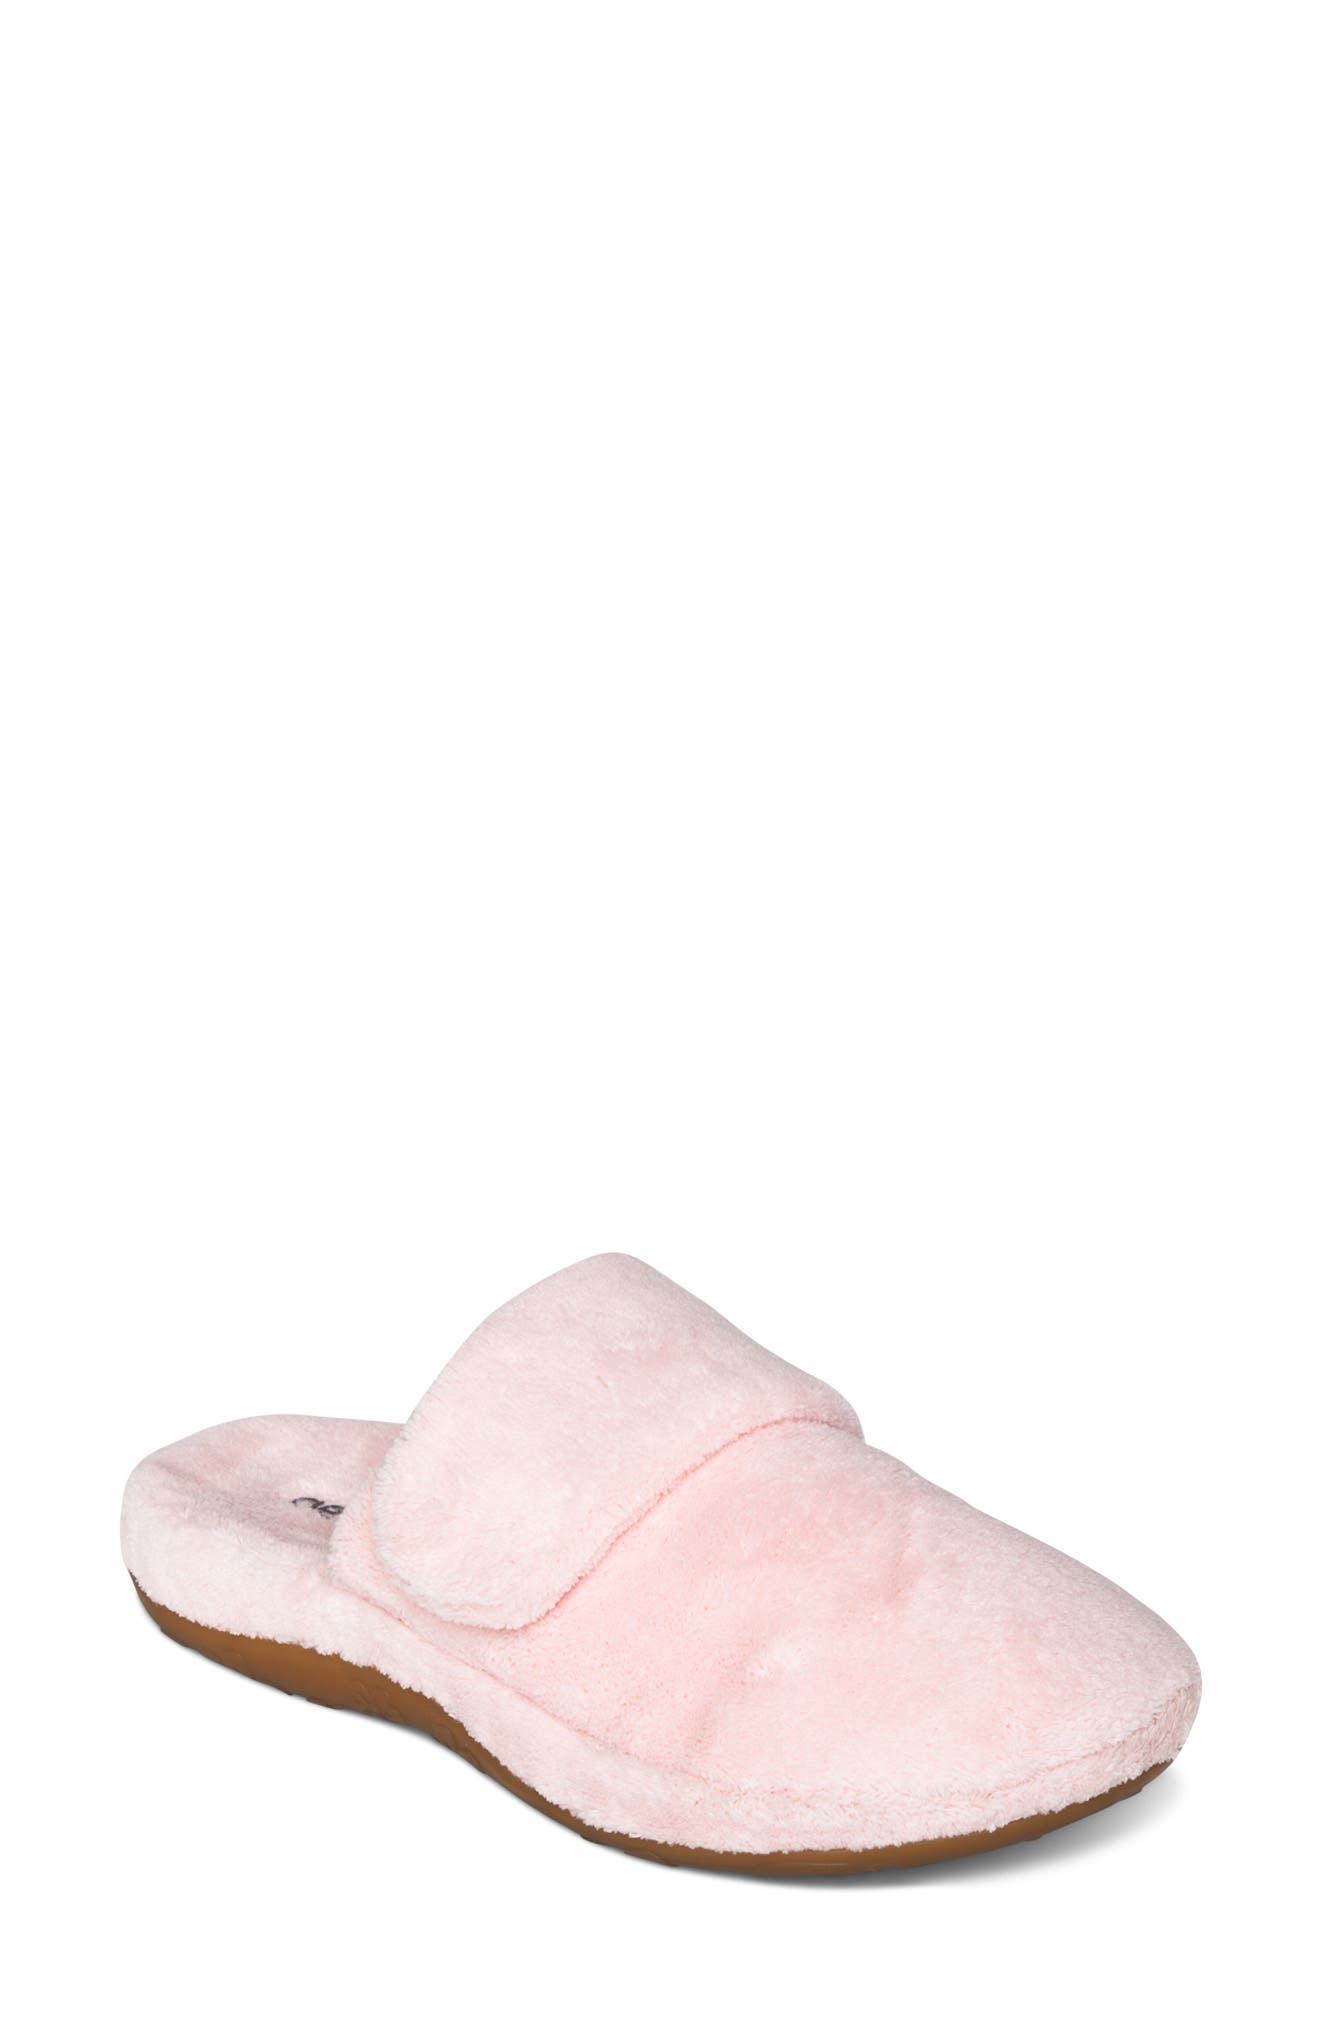 nordstrom womens slippers